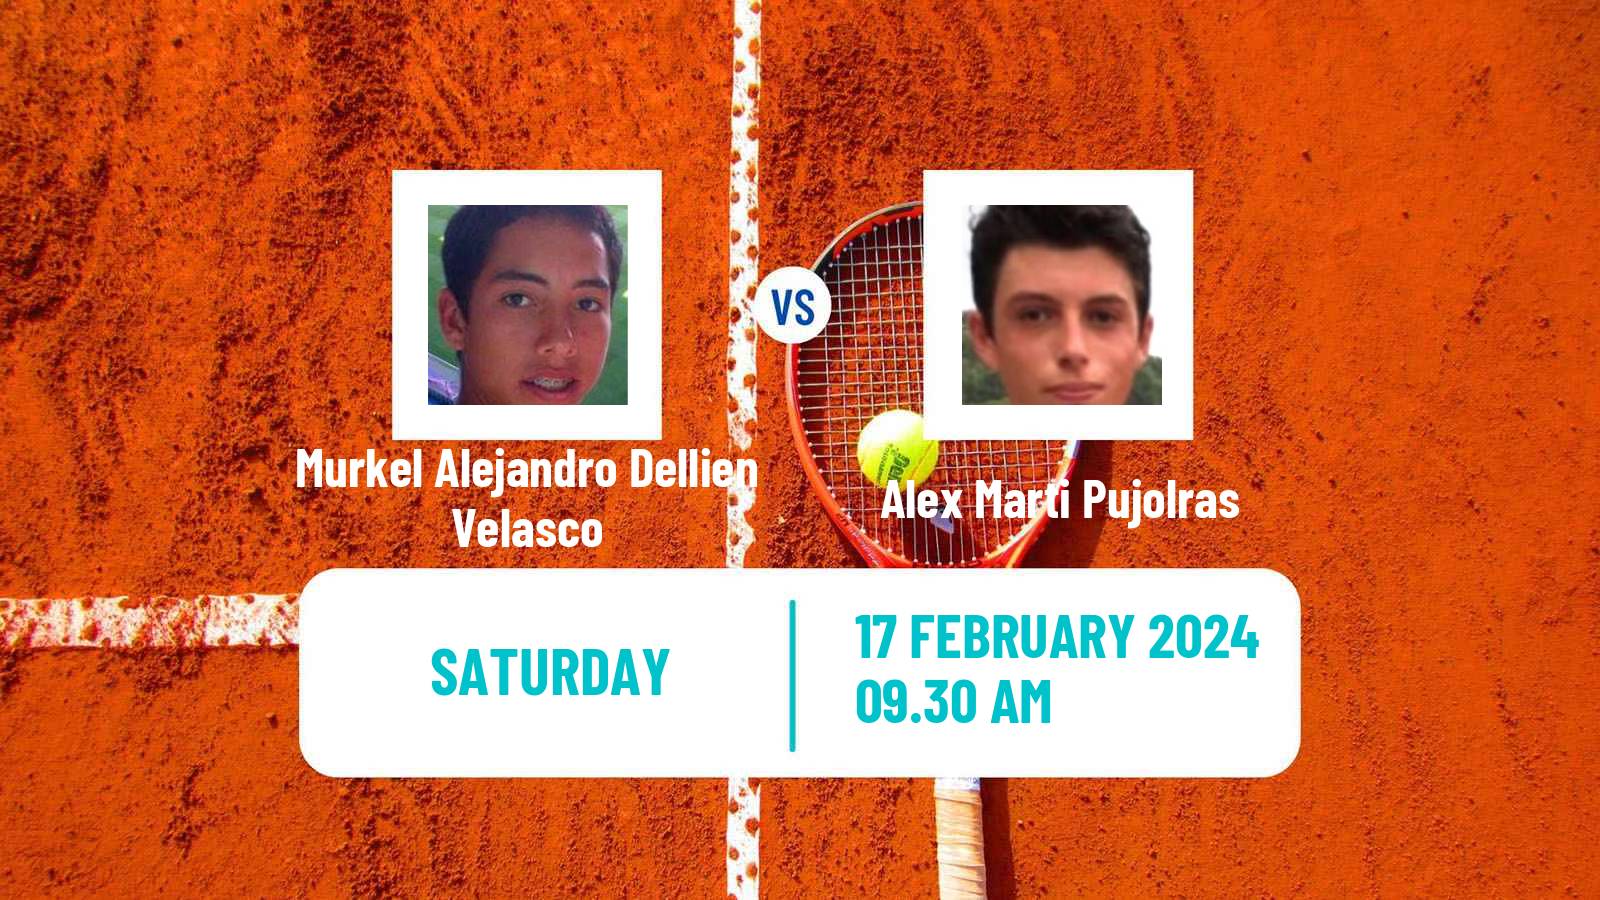 Tennis ITF M25 Punta Del Este 2 Men Murkel Alejandro Dellien Velasco - Alex Marti Pujolras